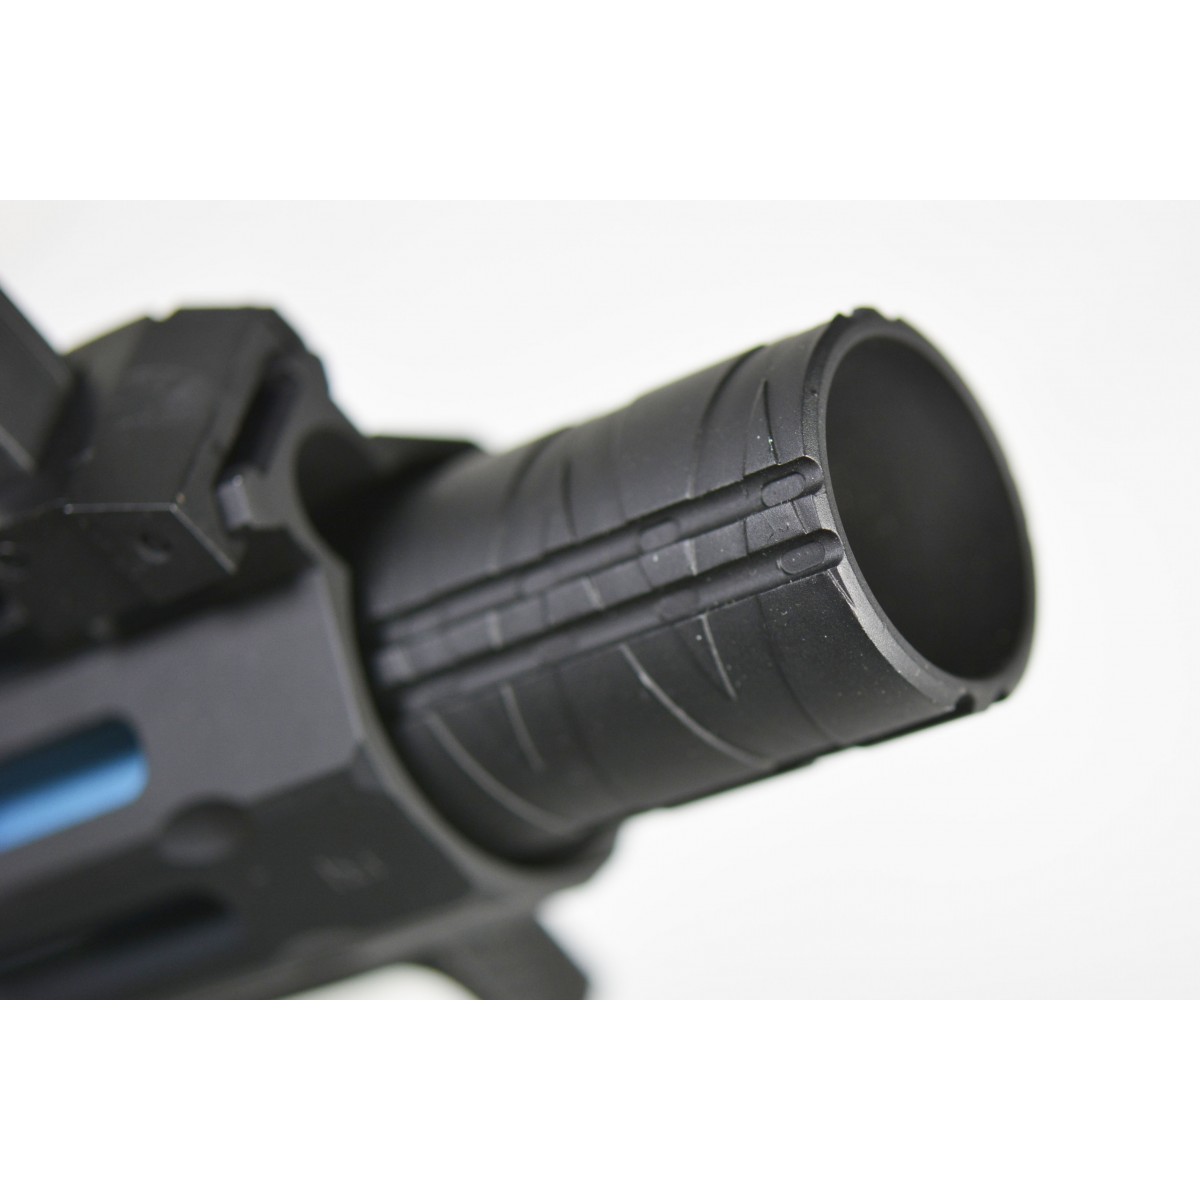 APS - Ghost Patrol Rifle 💪💪💪 (Toys gun) 🔫 eSilver Edge SDU 2.0